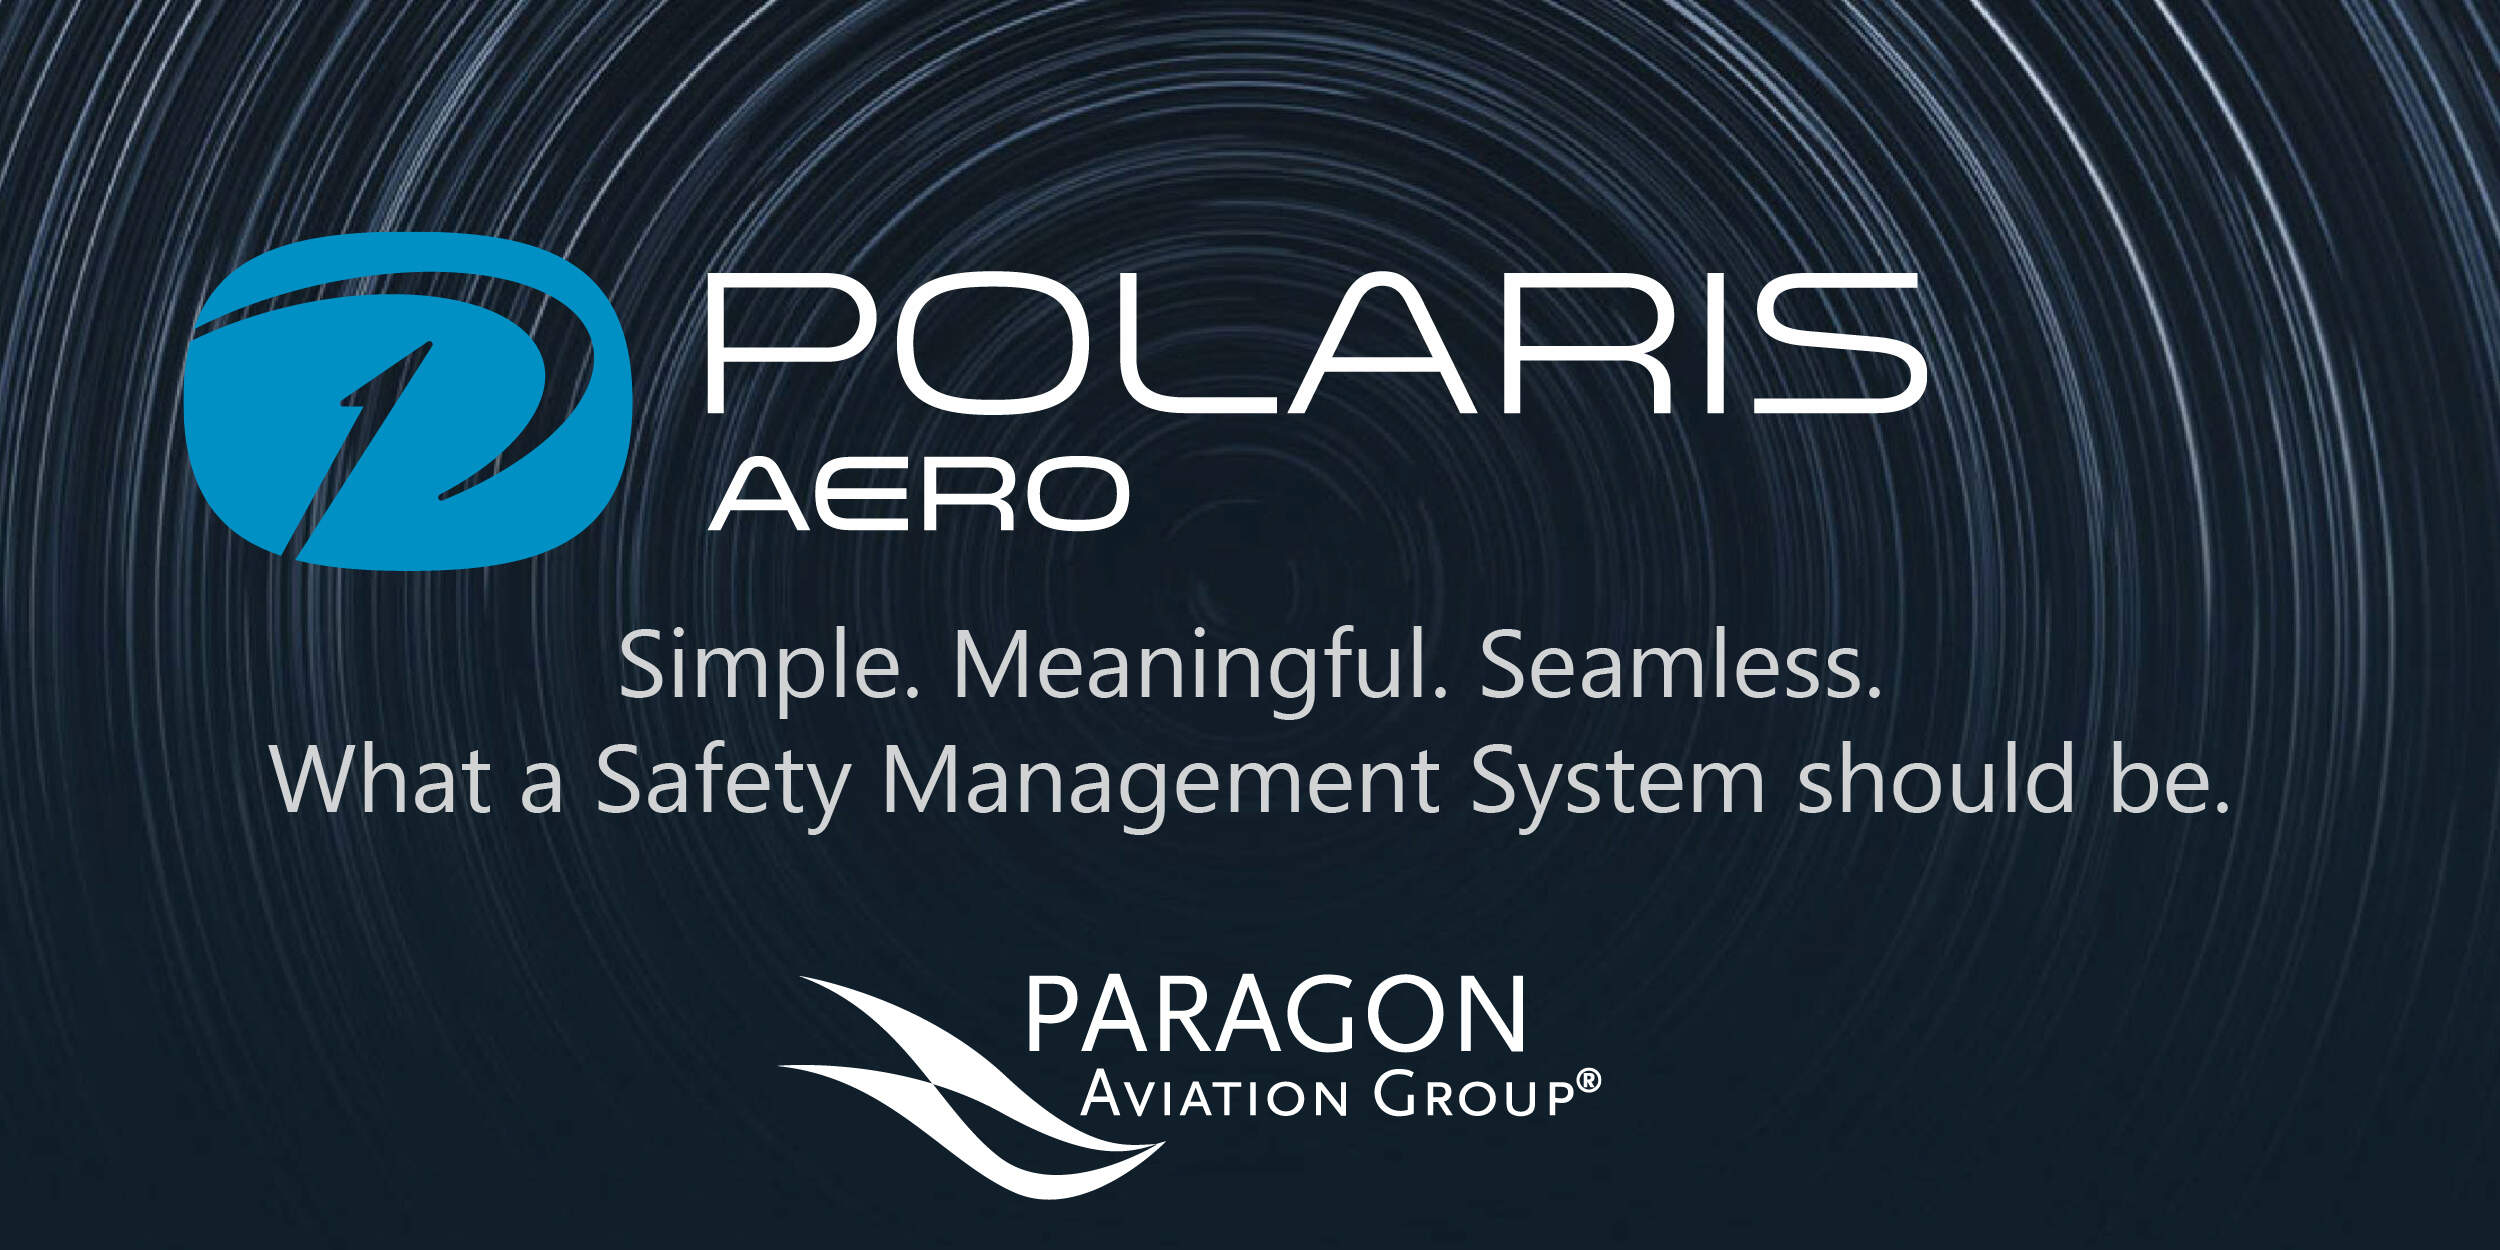 Polaris Aero Joins Paragon Aviation Group’s Vendor Program